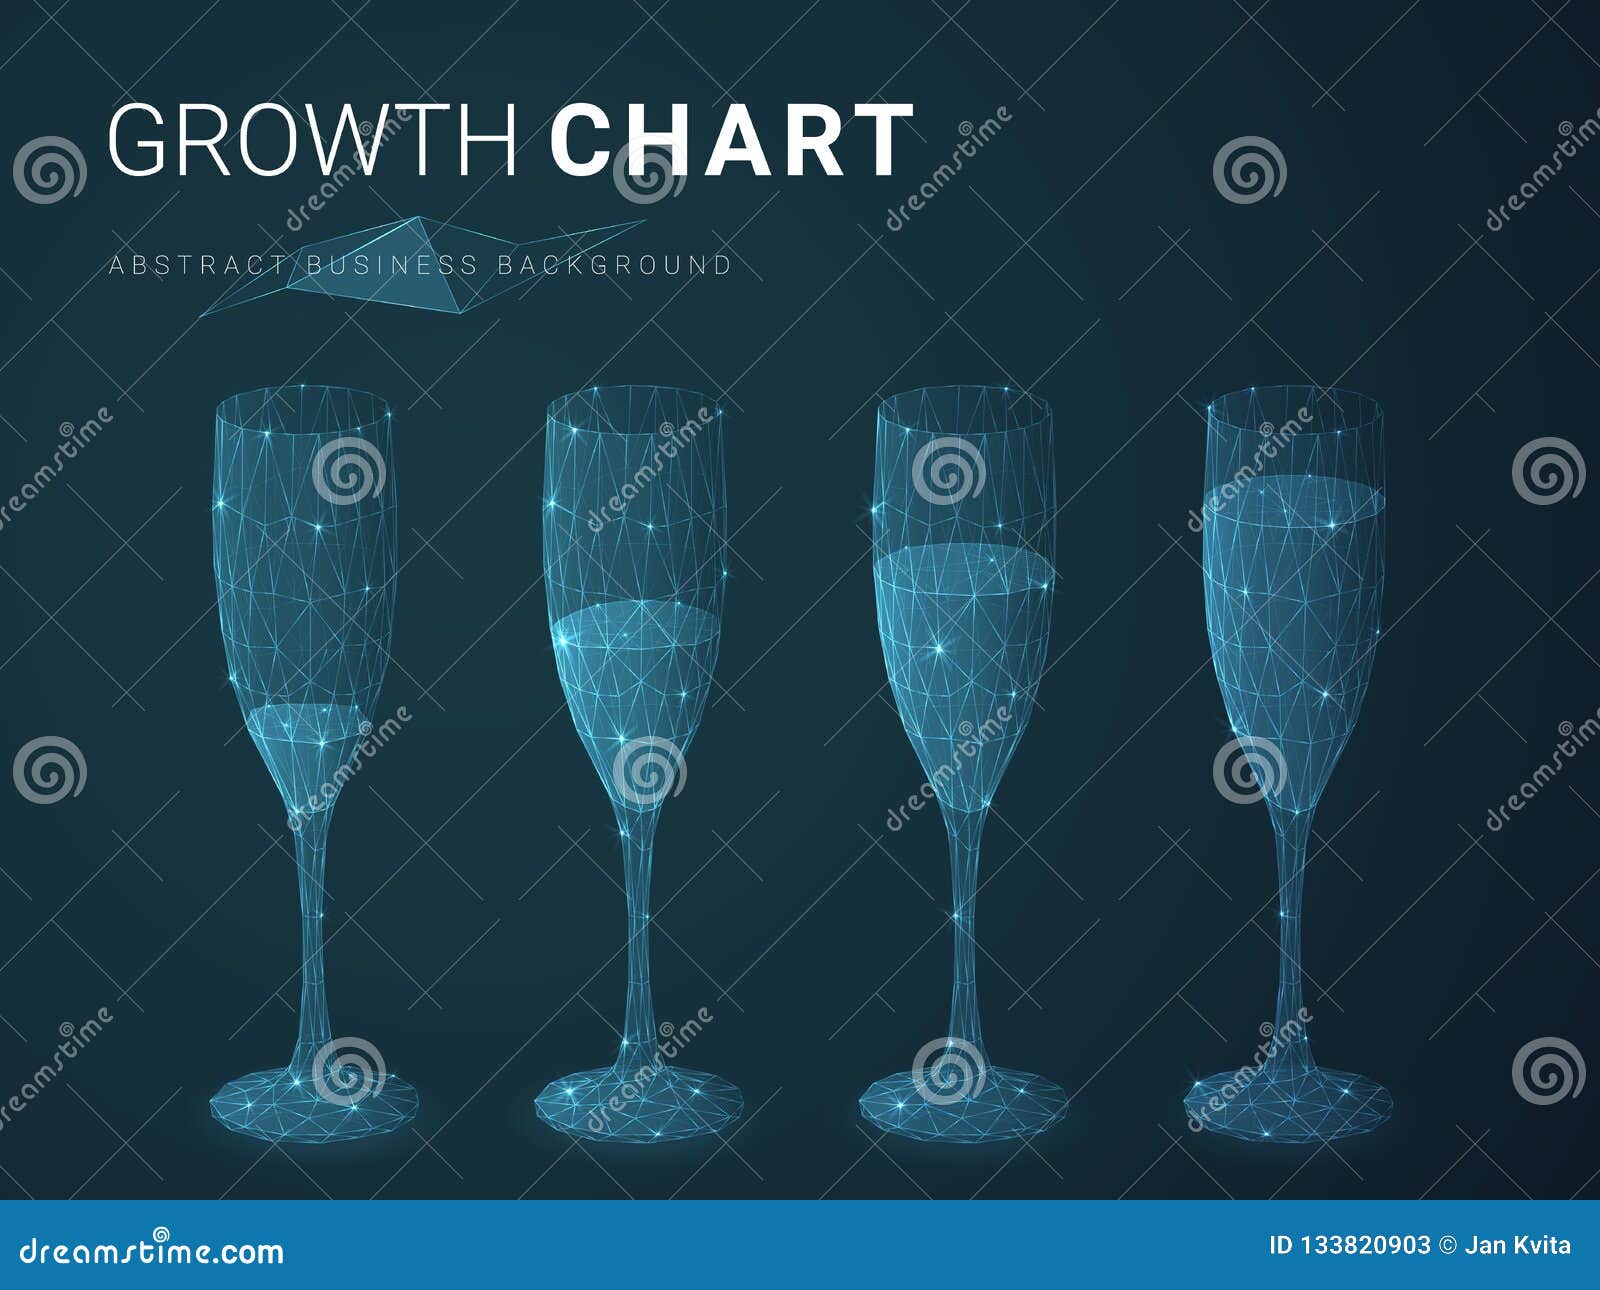 Wine Glass Shape Chart